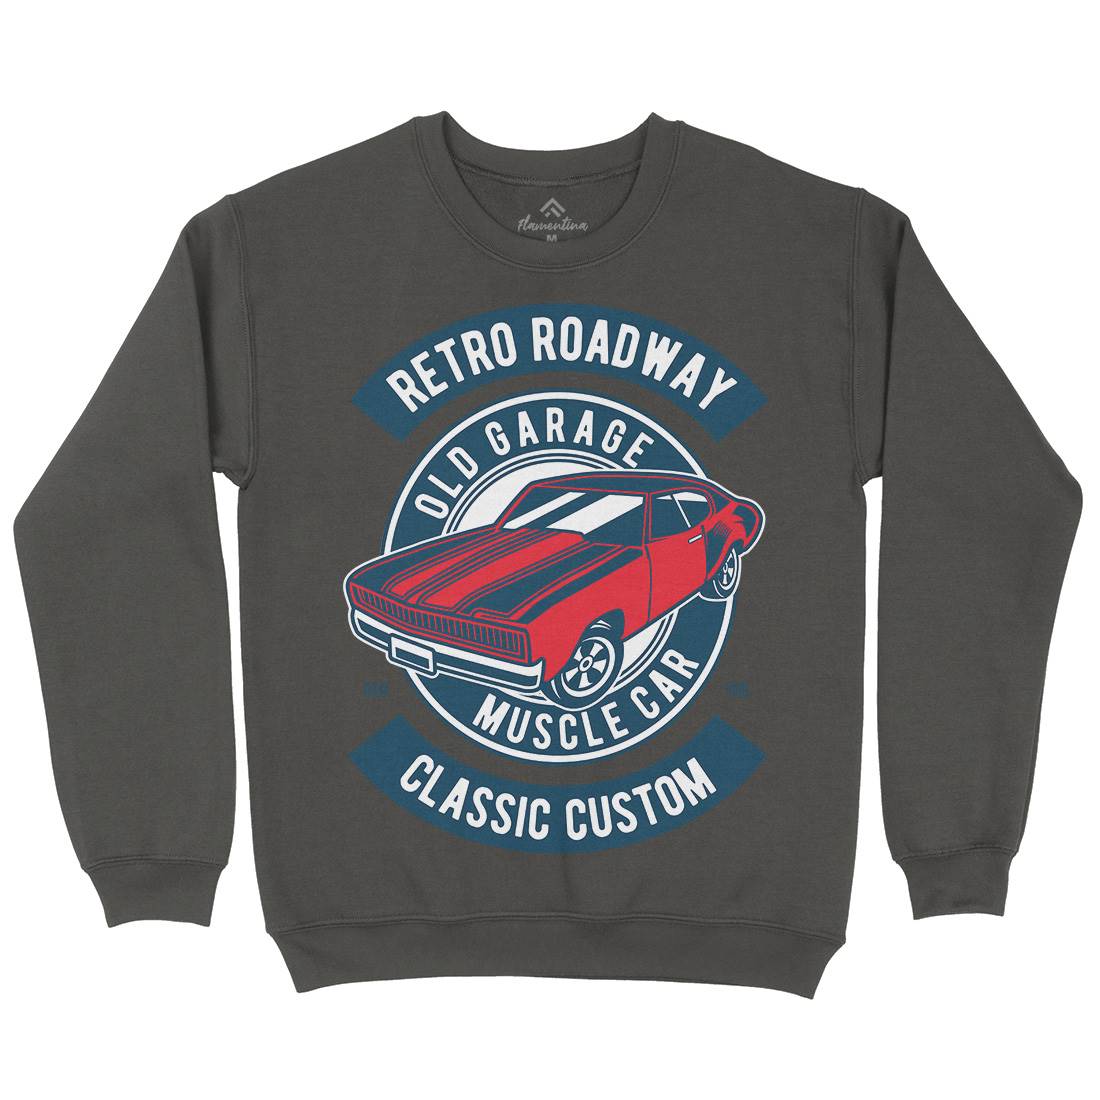 Retro Roadway Kids Crew Neck Sweatshirt Cars D568